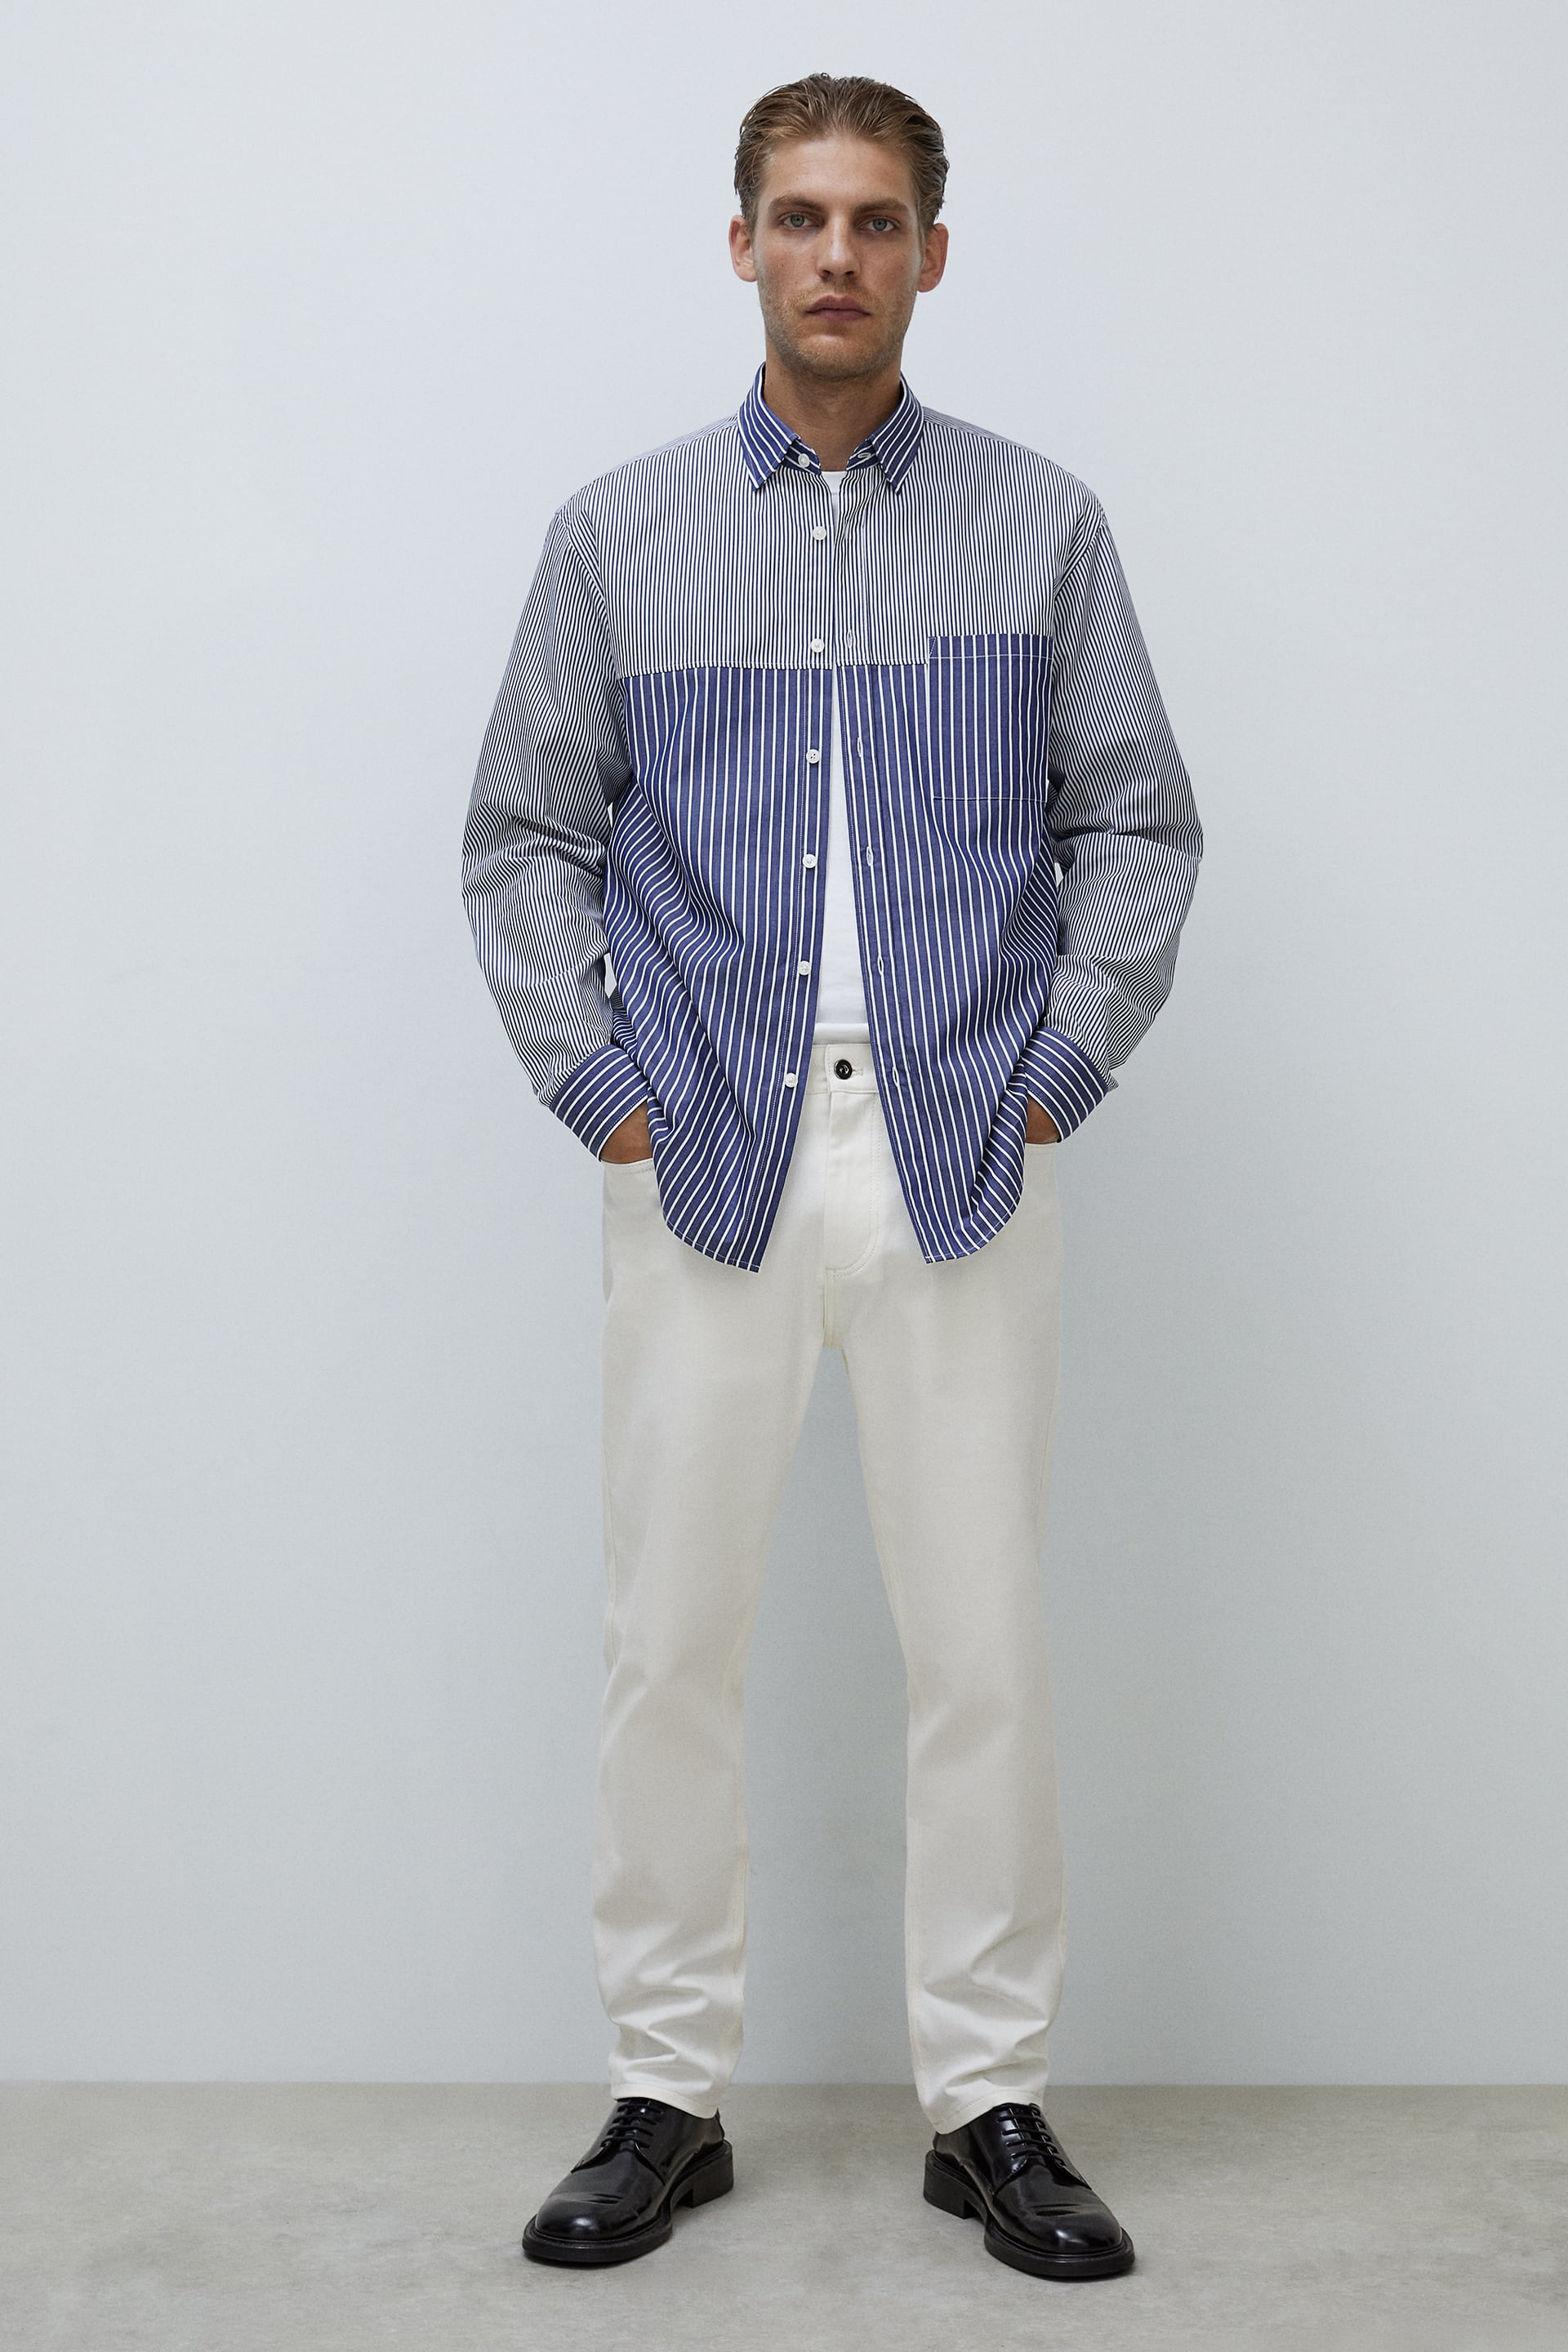 On Trend: Men's Vertical Striped Shirts - VanityForbes